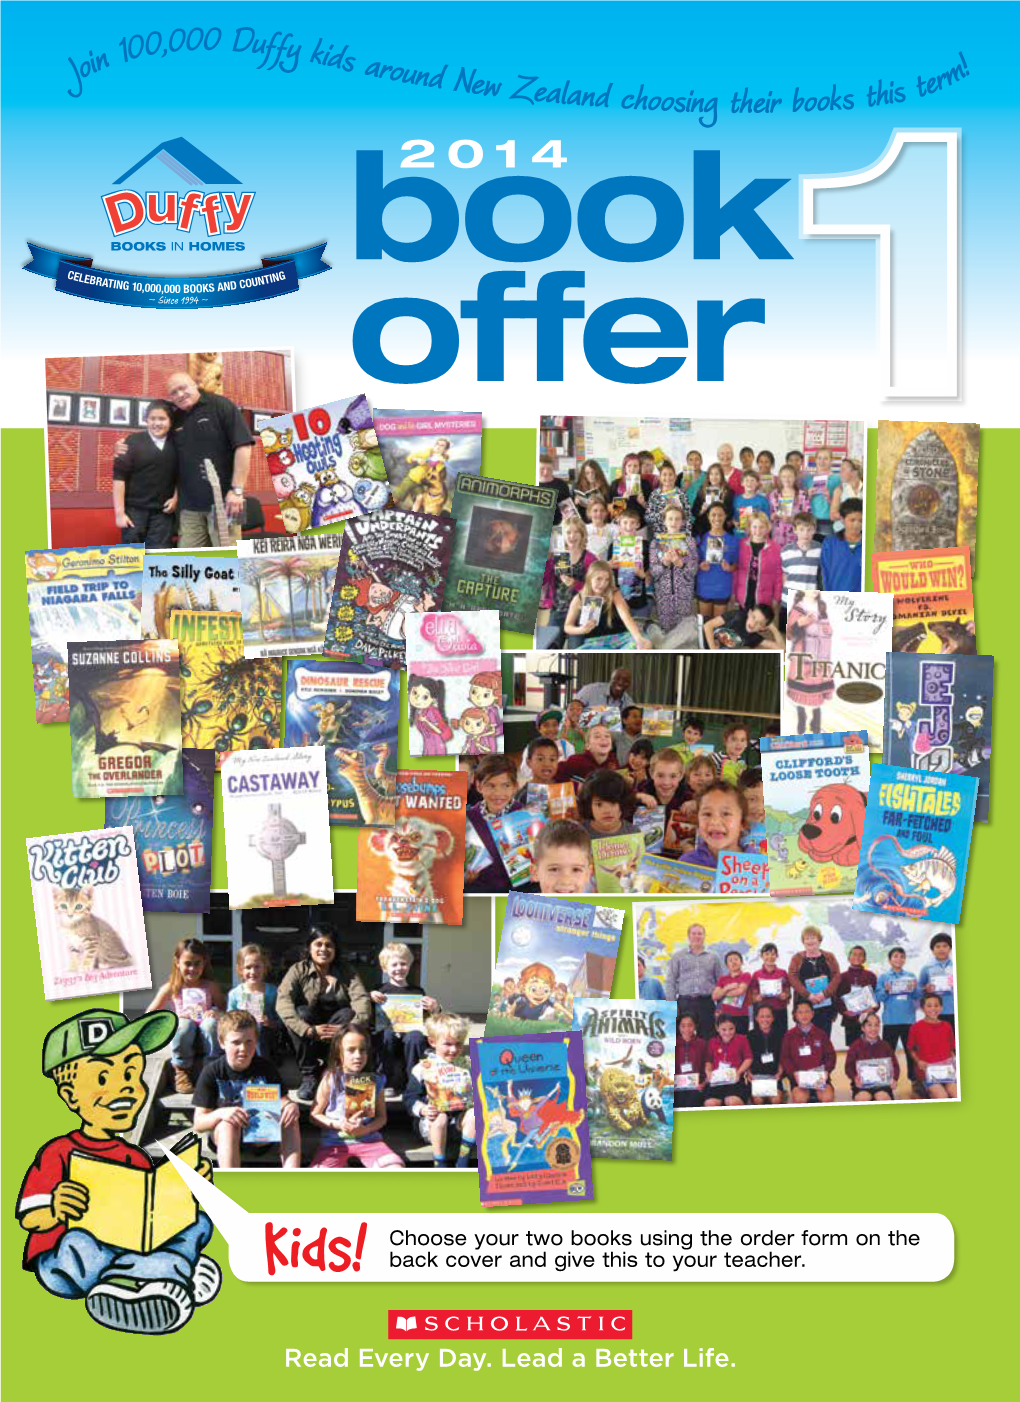 Join 100,000 Duffy Kids Around New Zealand Choosing Their Books This